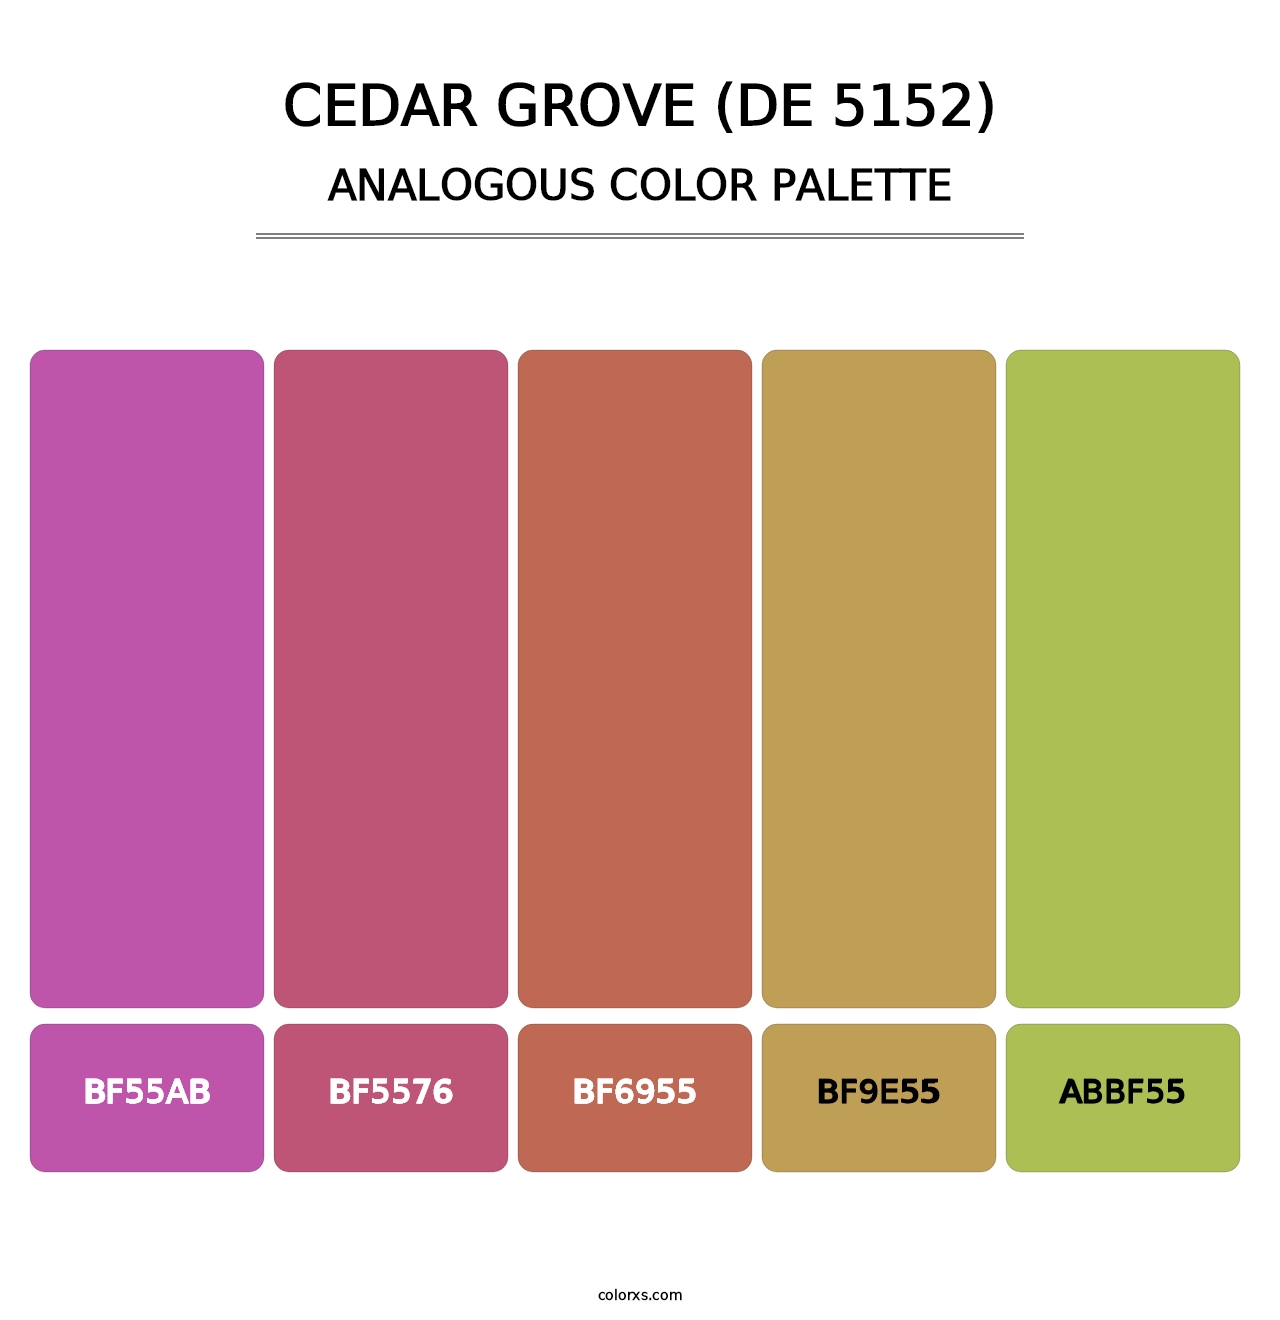 Cedar Grove (DE 5152) - Analogous Color Palette